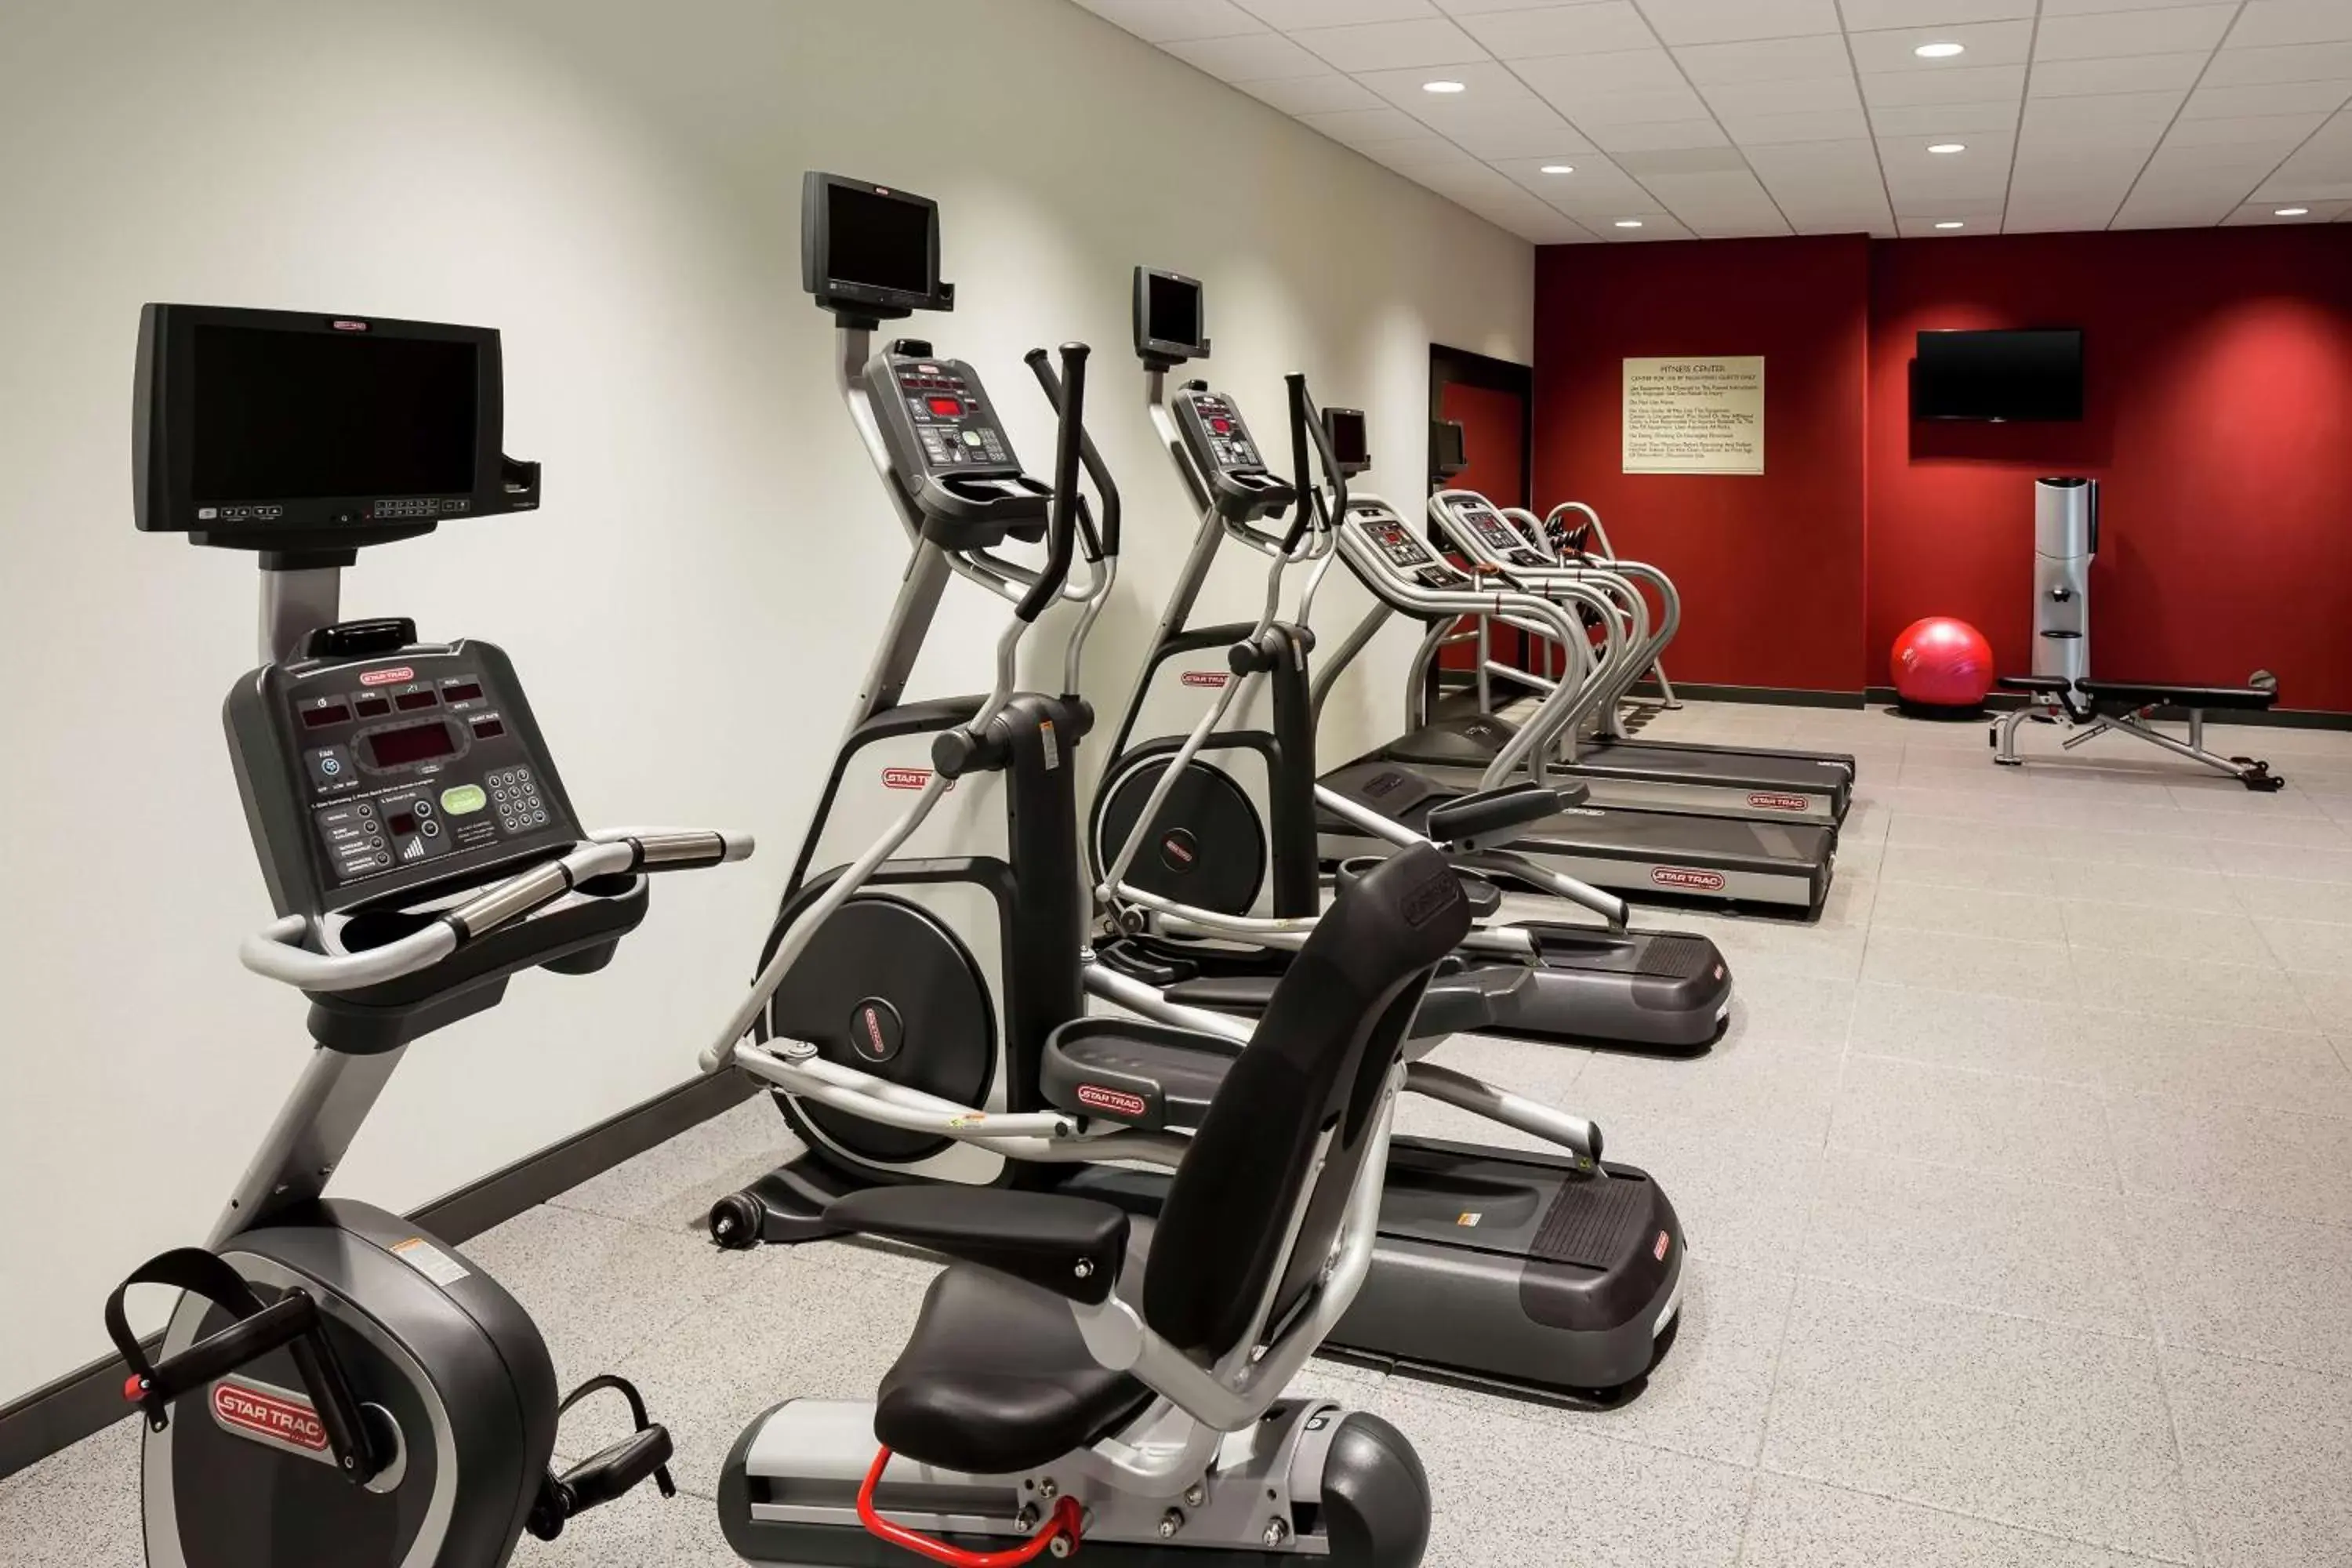 Fitness centre/facilities, Fitness Center/Facilities in Hilton Garden Inn Bettendorf/ Quad Cities